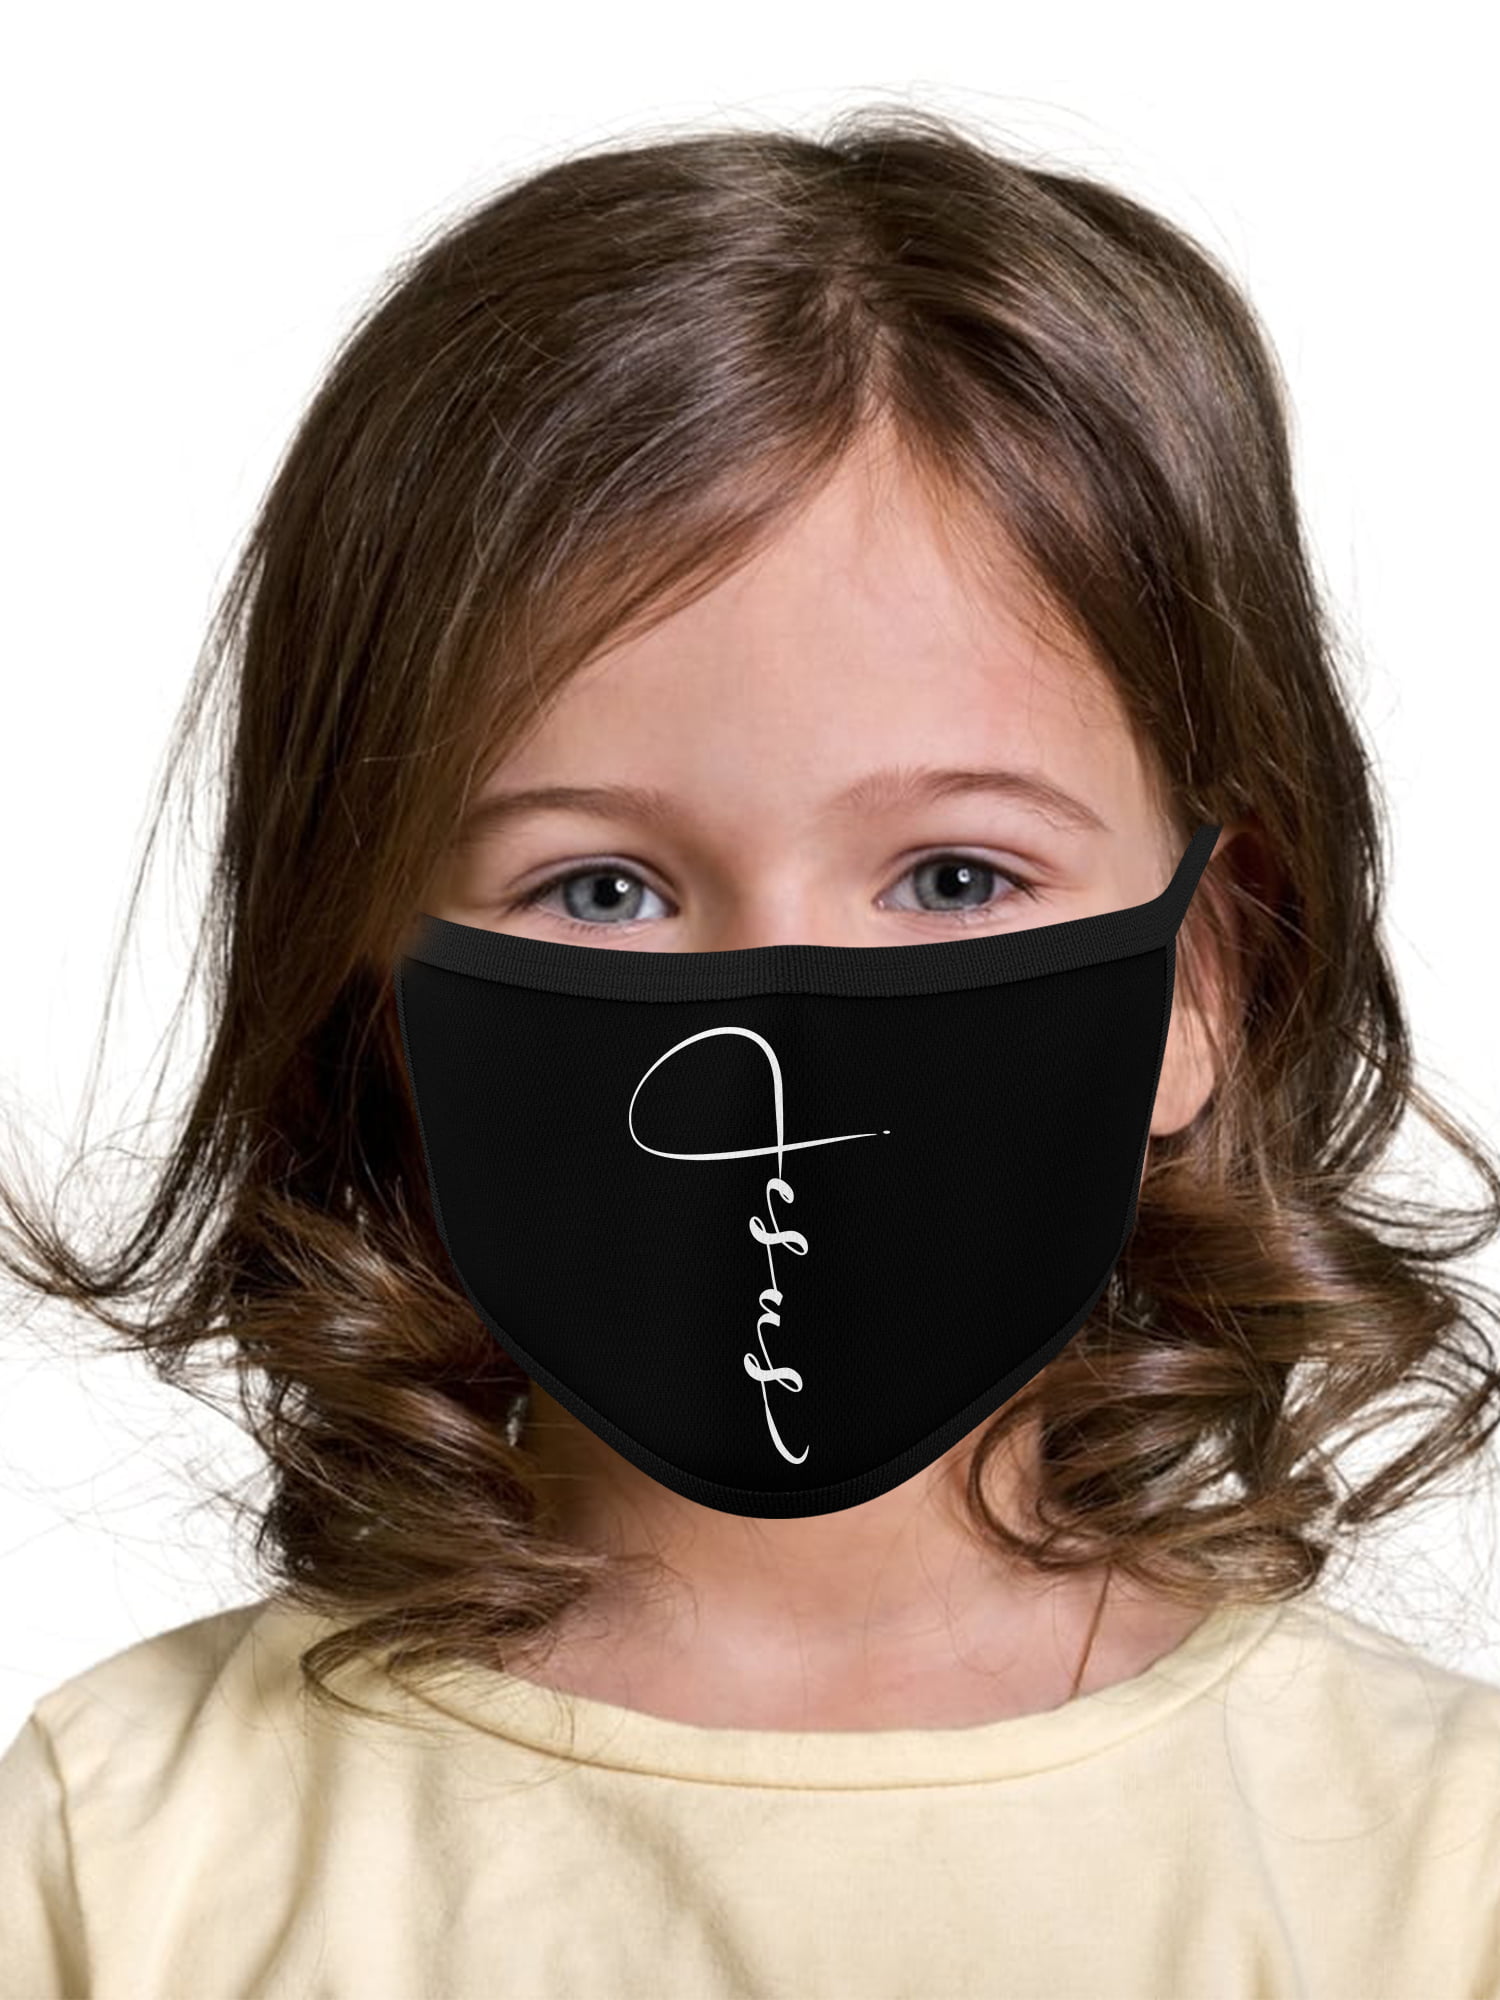 Details about   Adult Rhinestone Letter Print Cotton Mouth Masks Washable Reusable Face Masks 